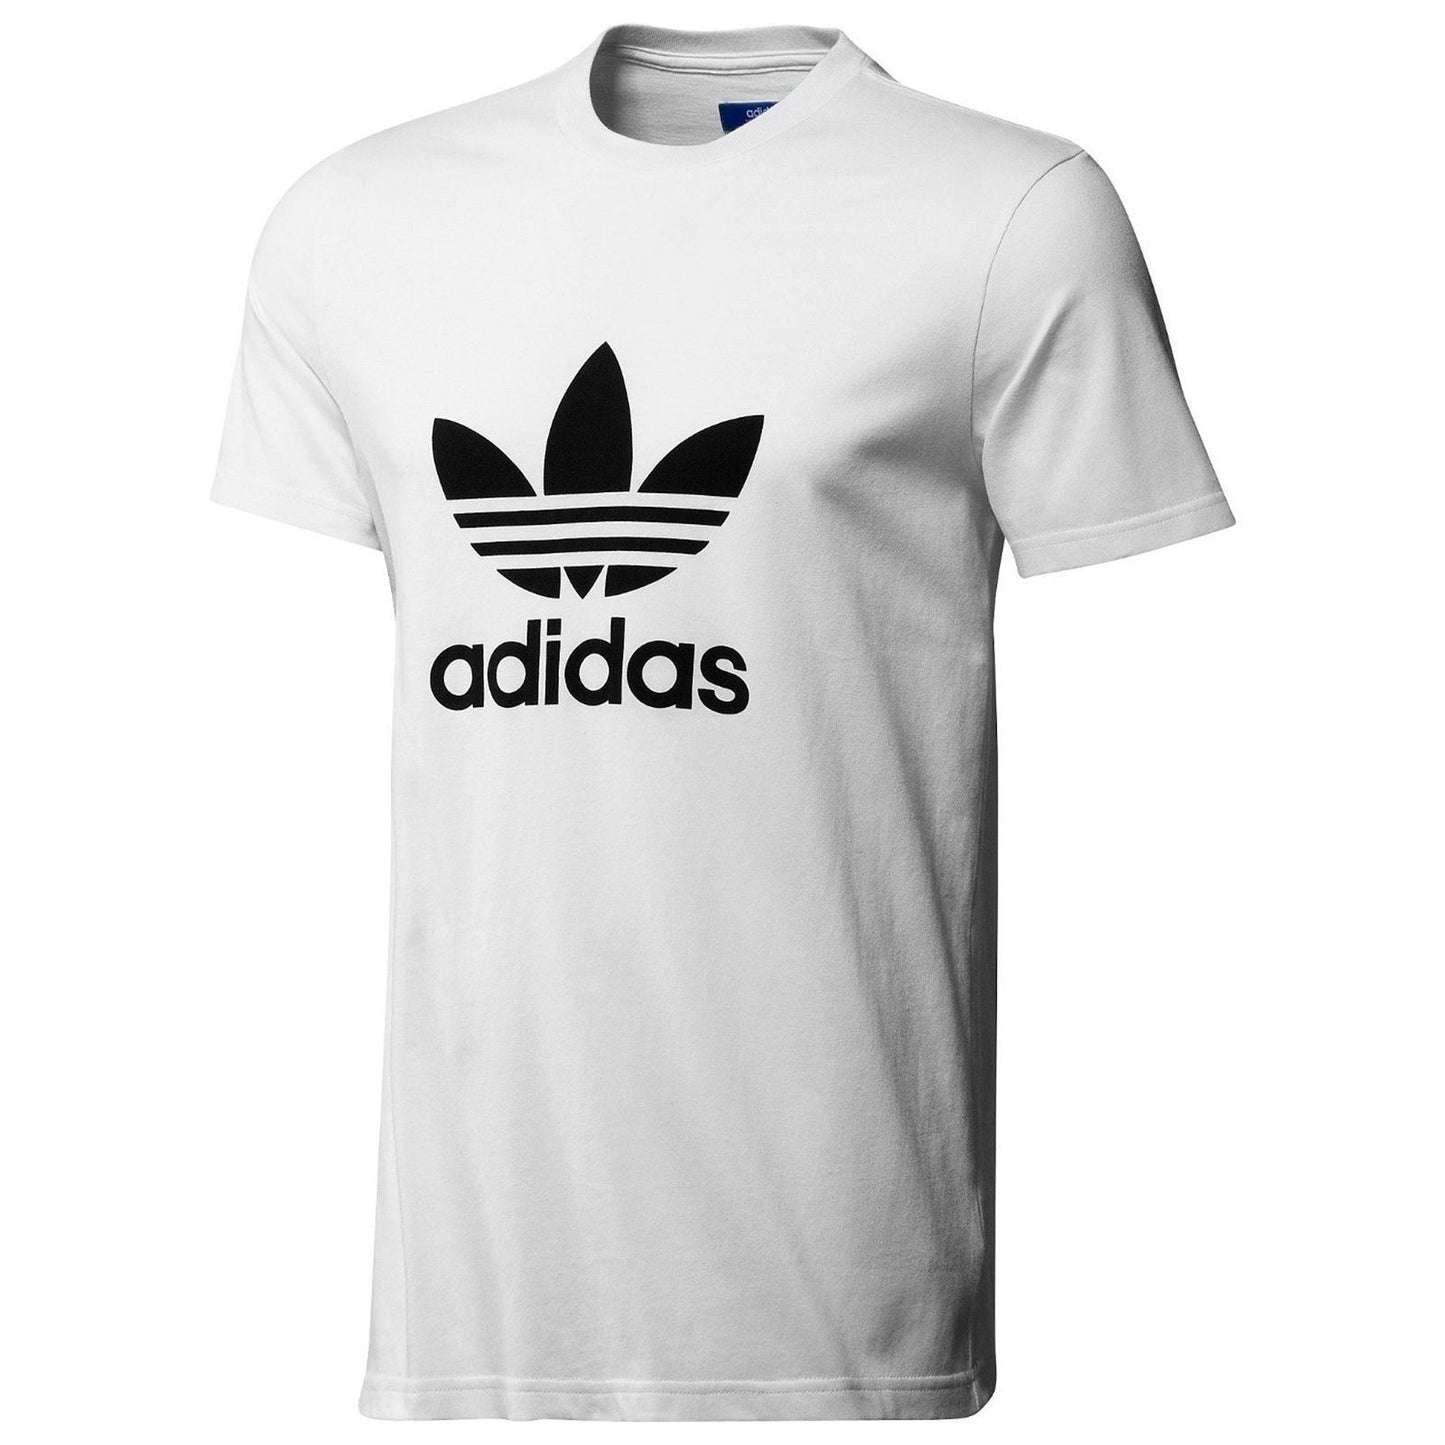 Adidas Originals Trefoil Tee Crew Neck Cotton Casual T-Shirt All Size S M L XL WHITE